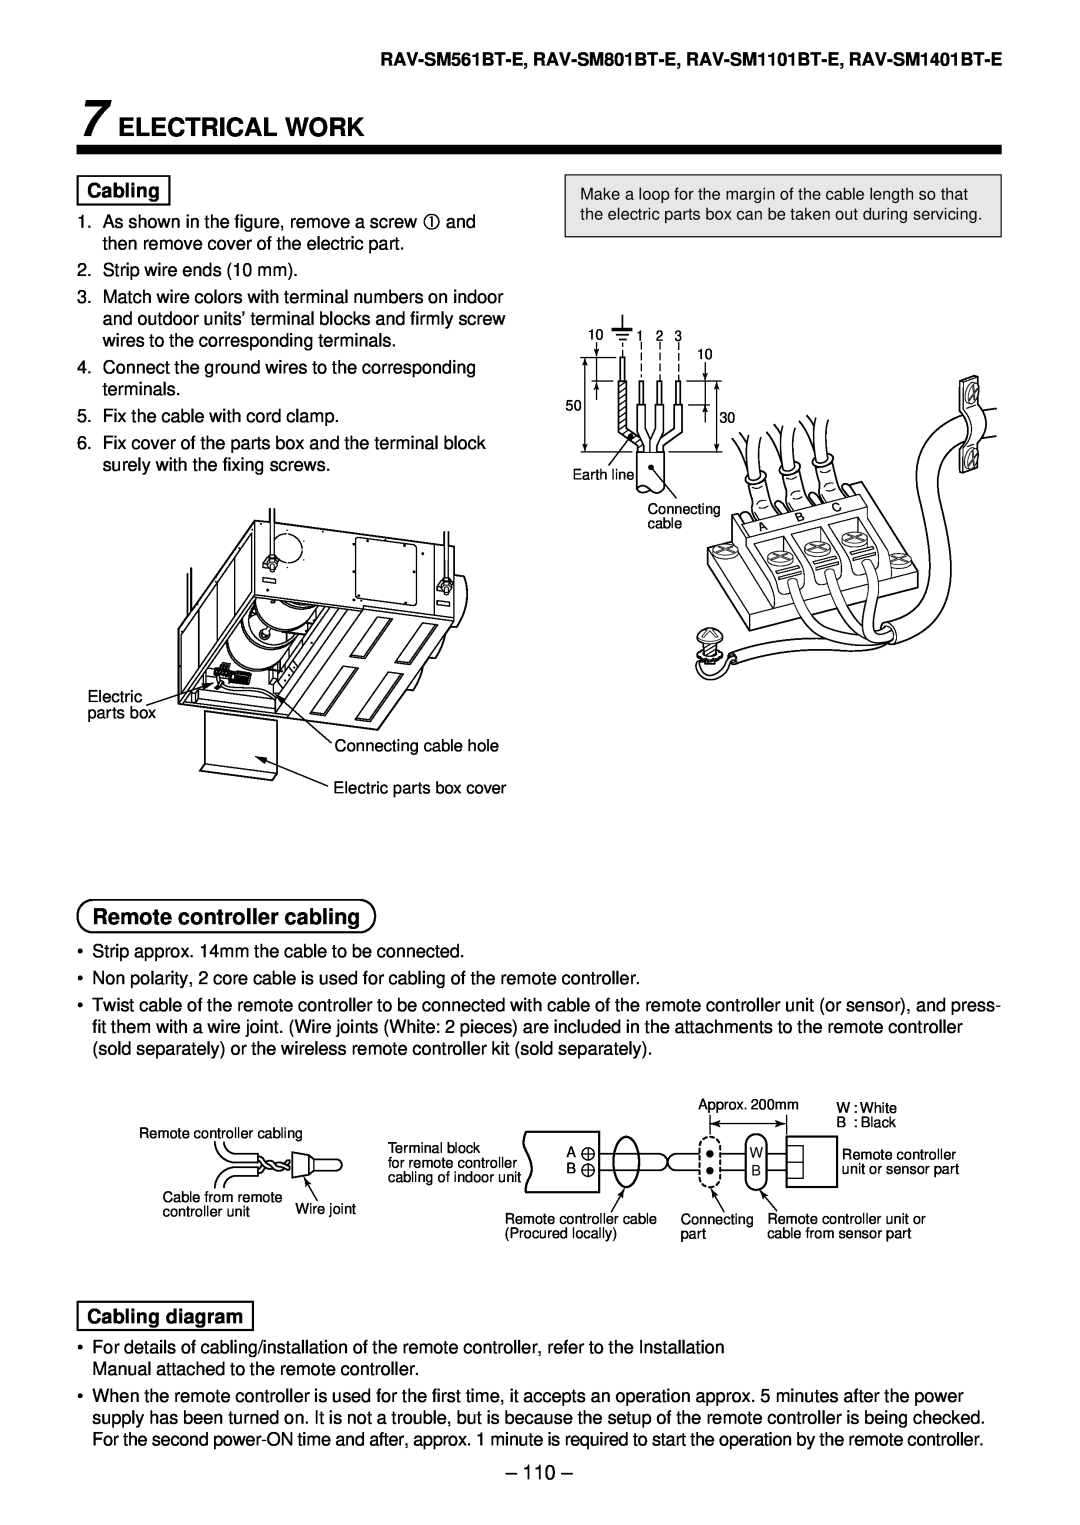 Toshiba RAV-SM801AT-E, RAV-SM1101AT-E, RAV-SM1401AT-E Electrical Work, Remote controller cabling, Cabling diagram 